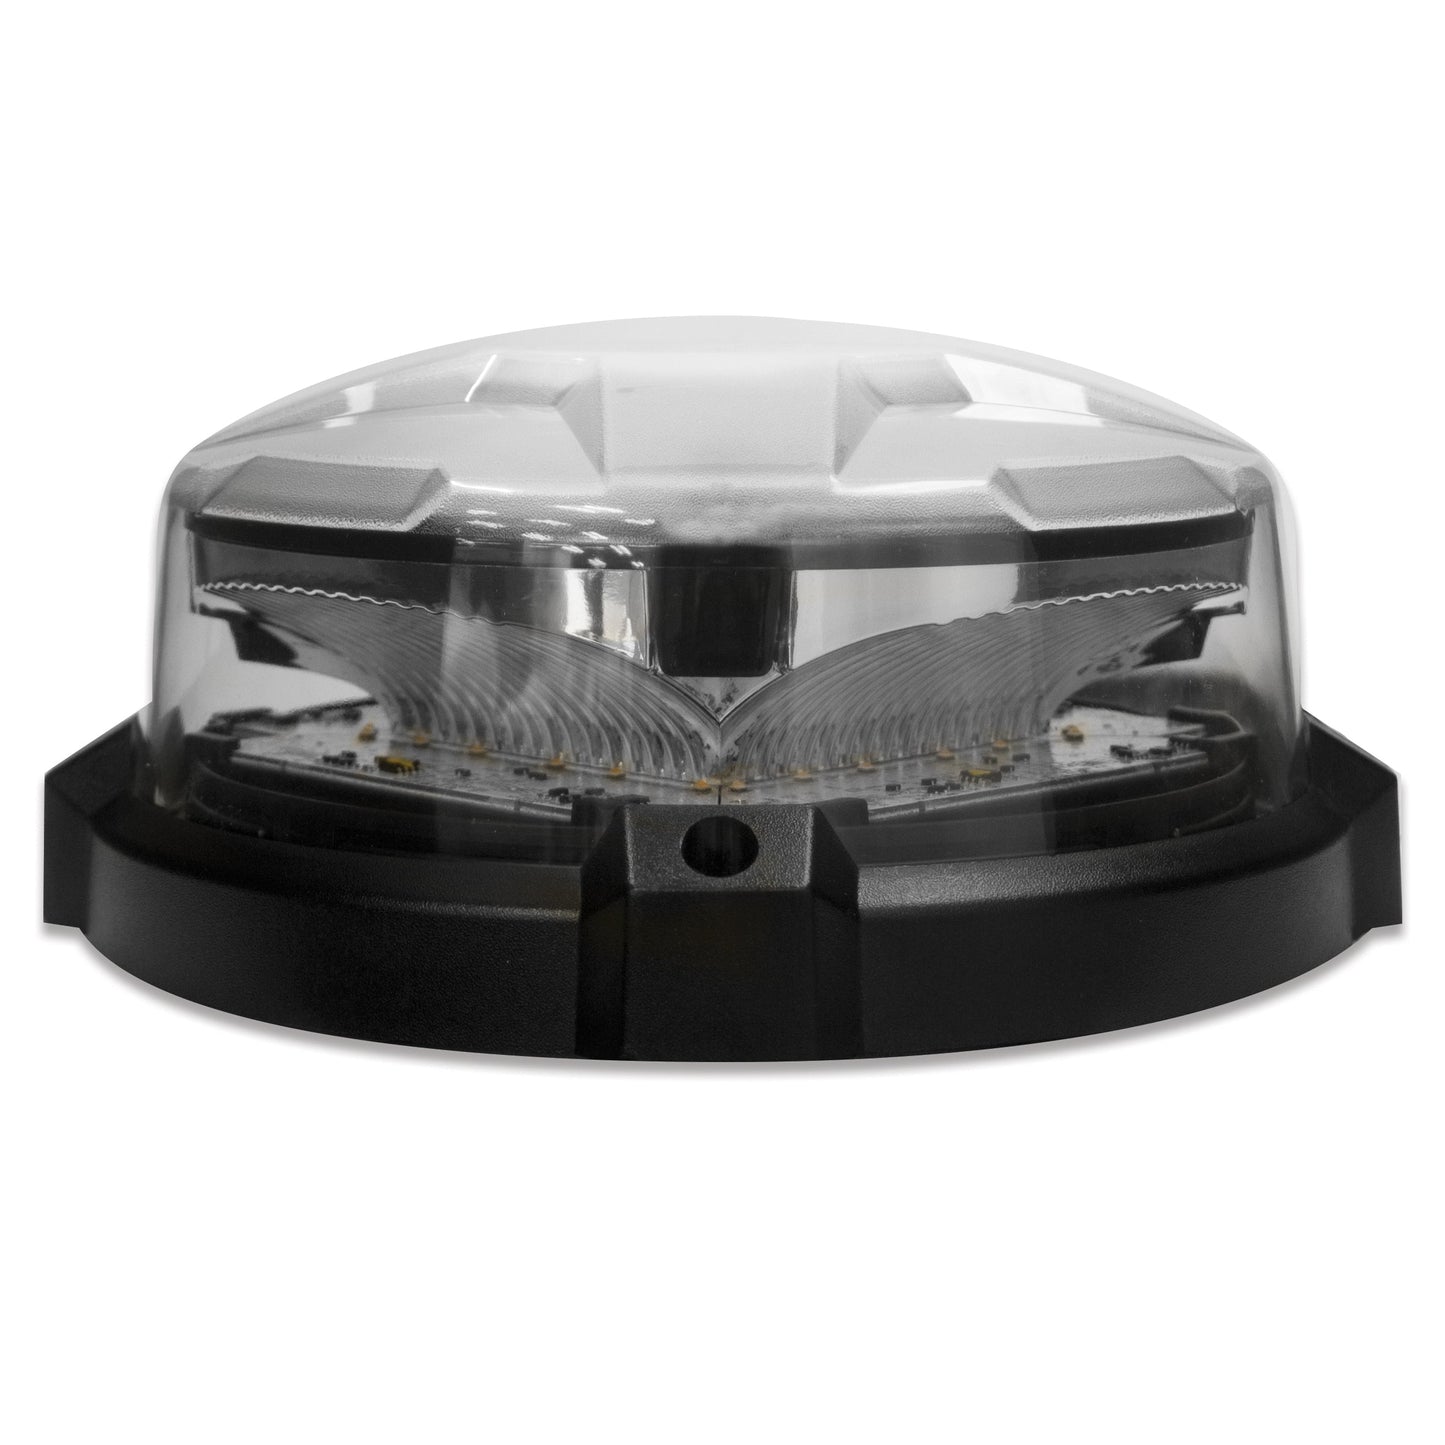 Soundoff Signal PNRBCDRNGB Black Dress Ring For Nroads® Beacons